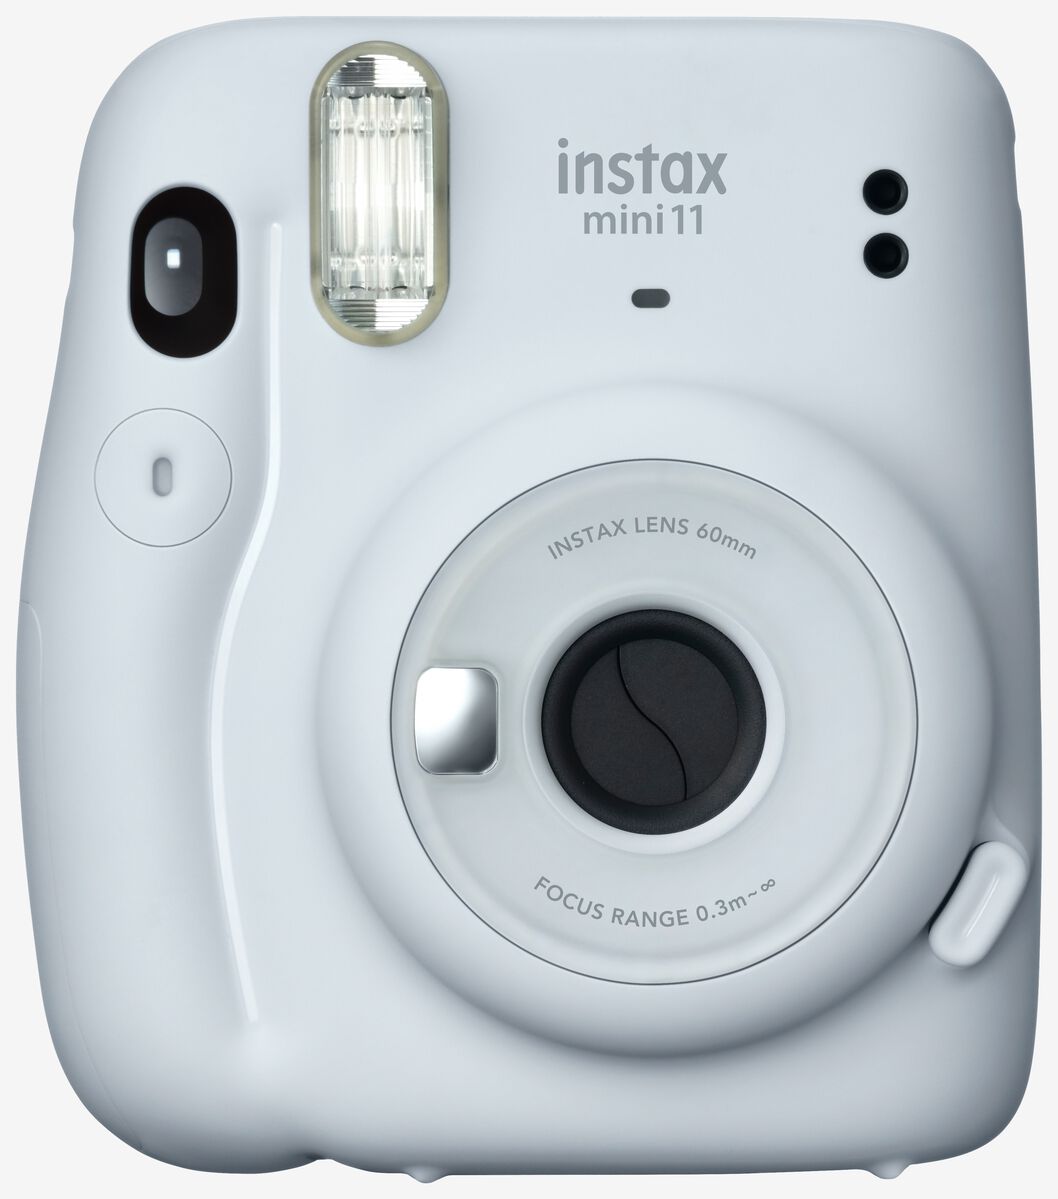 appareil photo instantané Fujifilm Instax mini 11 blanc mini 11 - 60390001 - HEMA